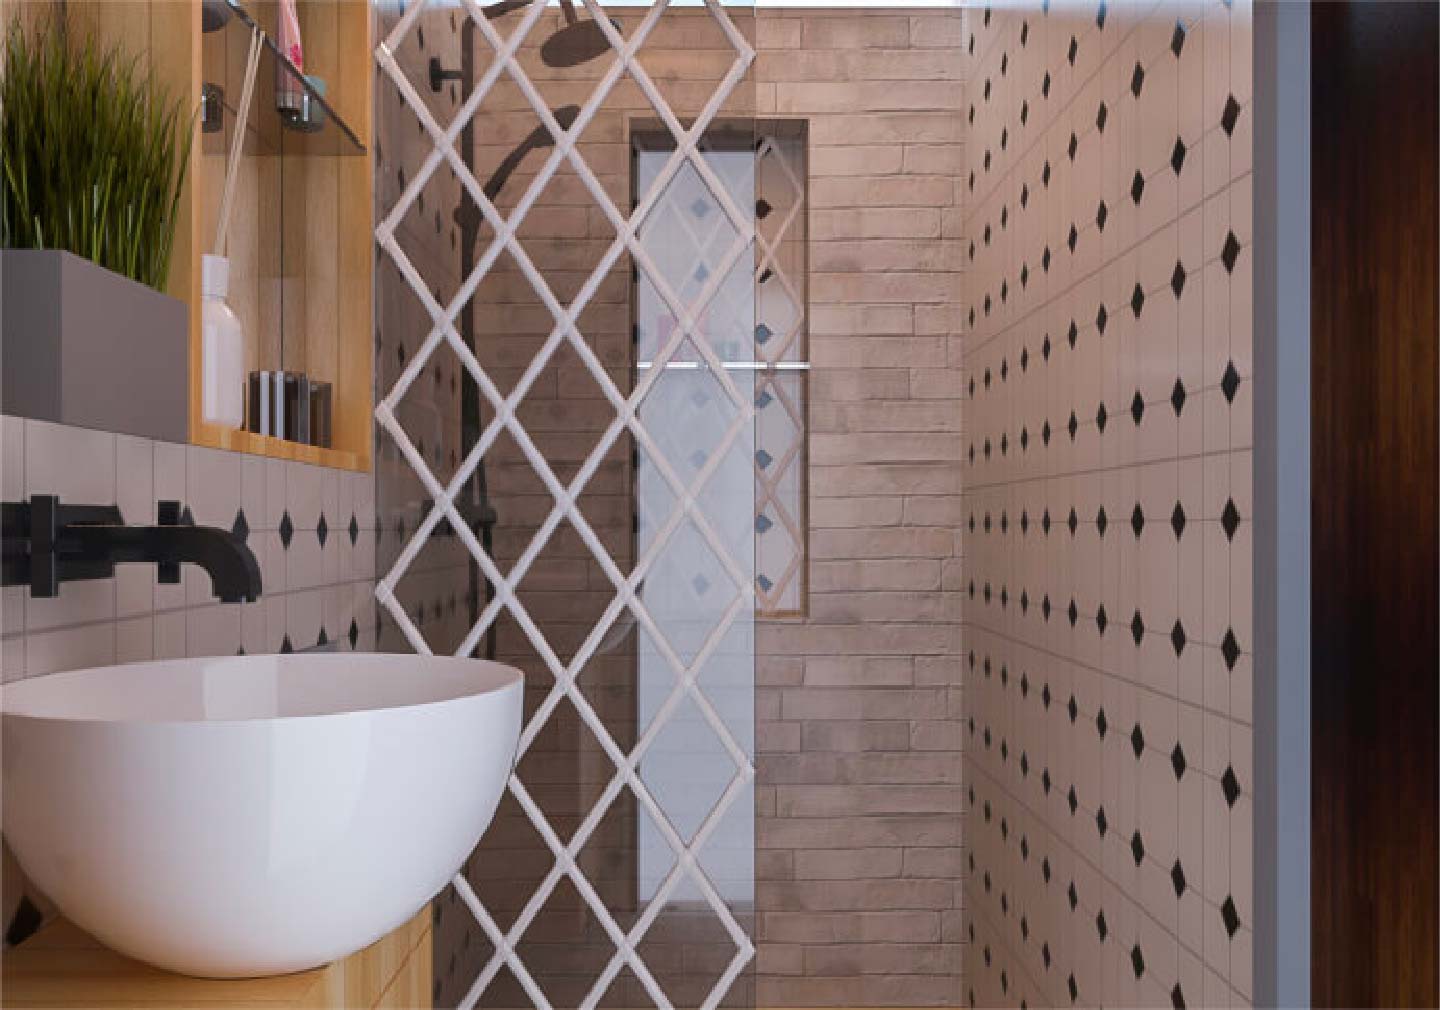 Focus on the Sink - Bathroom Interior Design